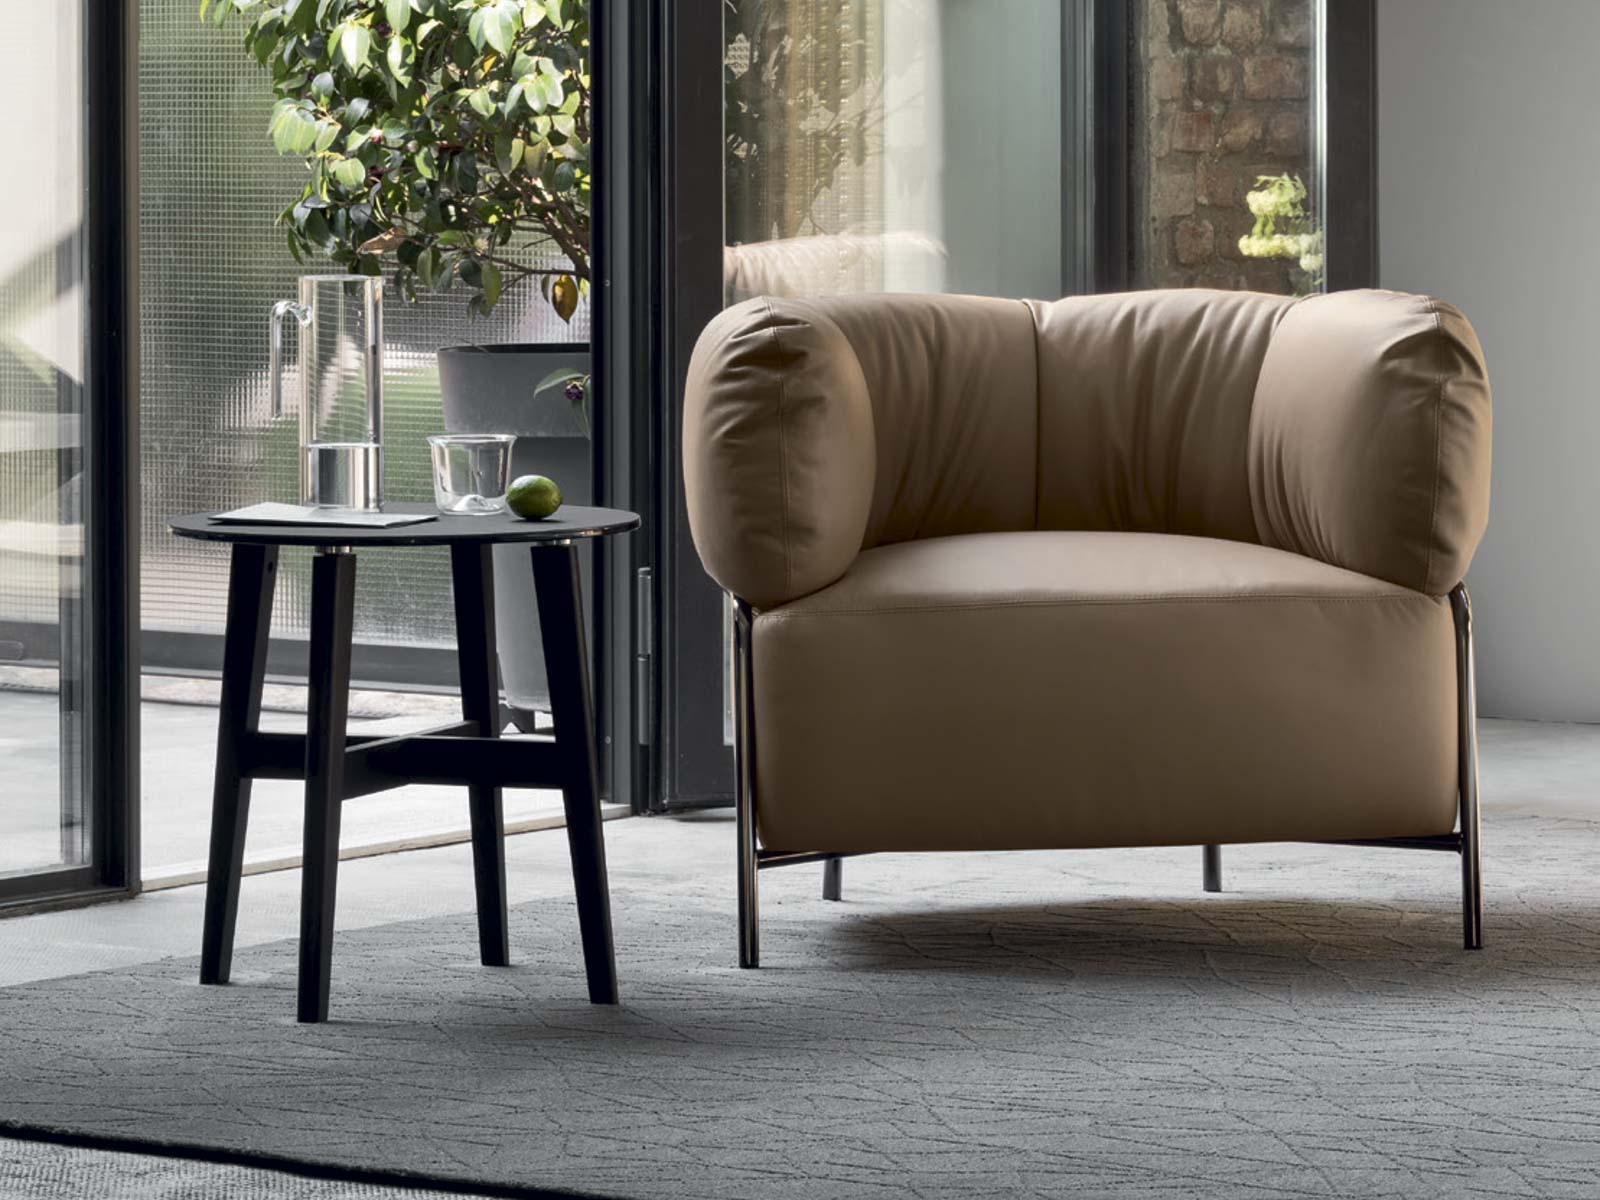 Quadrotta armchair by Calligaris Mariette Clermont furniture Laval